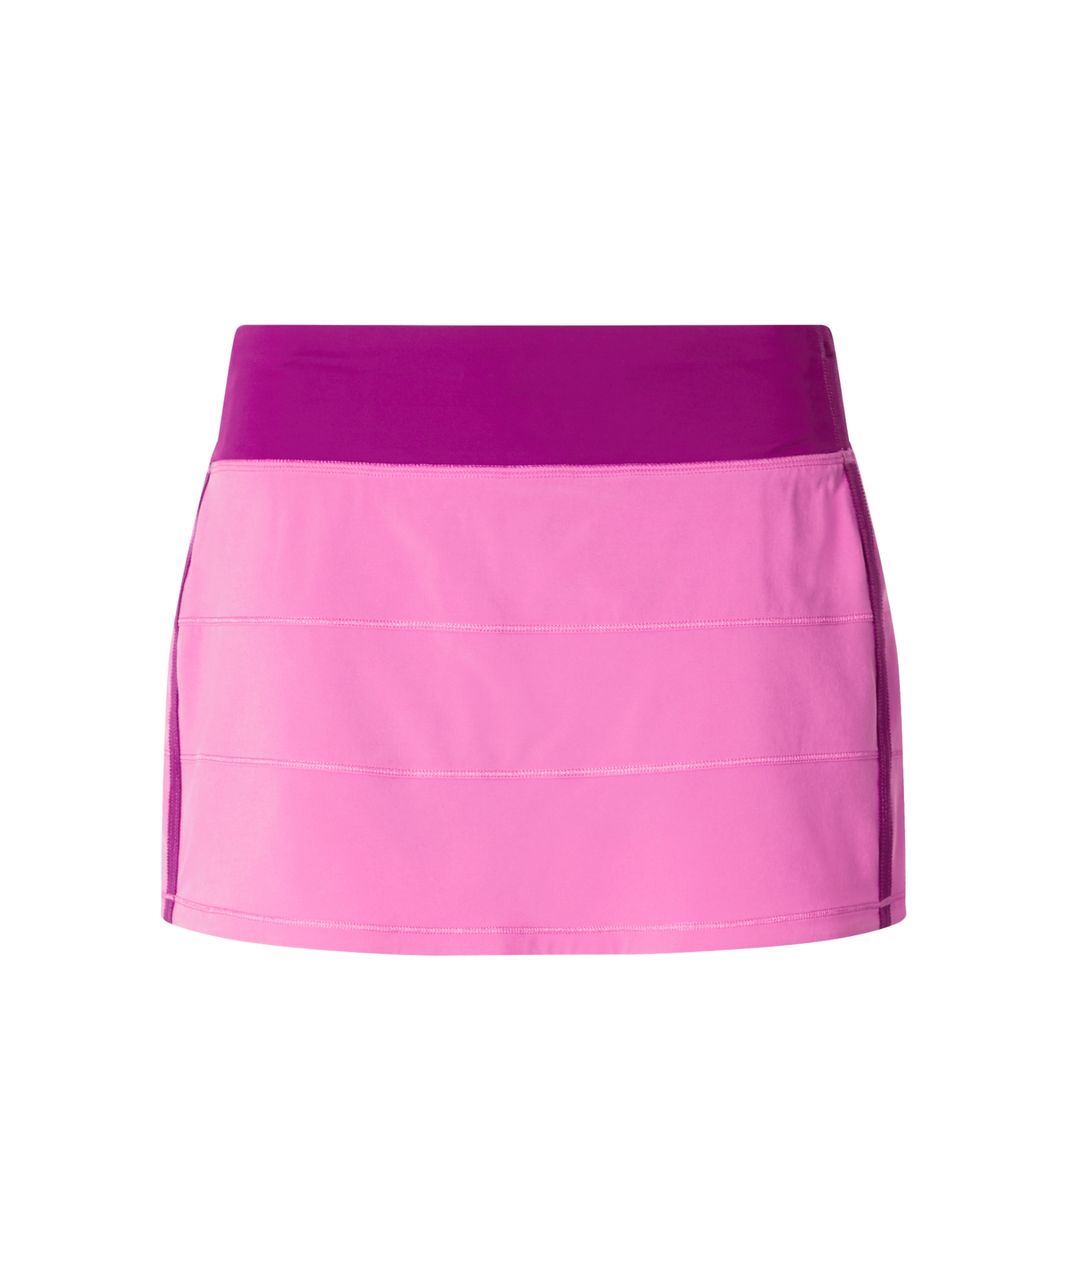 Lululemon Pace Rival Skirt II (Regular) - Pink Paradise / Regal Plum